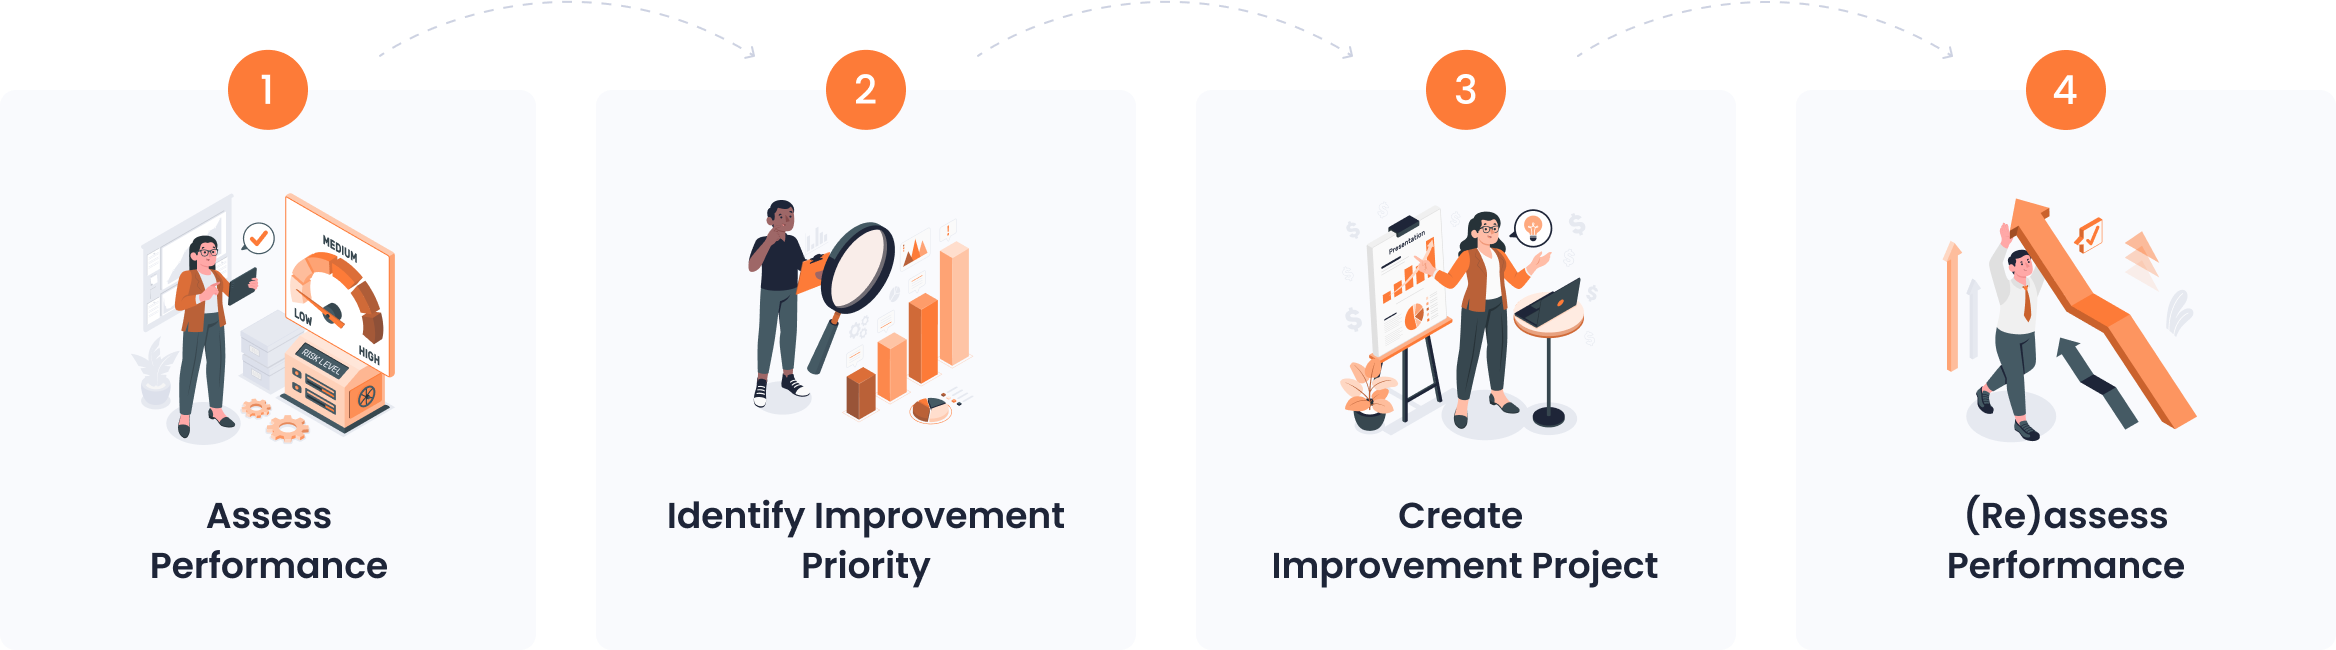 Assess Performance → Identify Improvement Priority → Create Improvement Project → (Re)assess Performance.